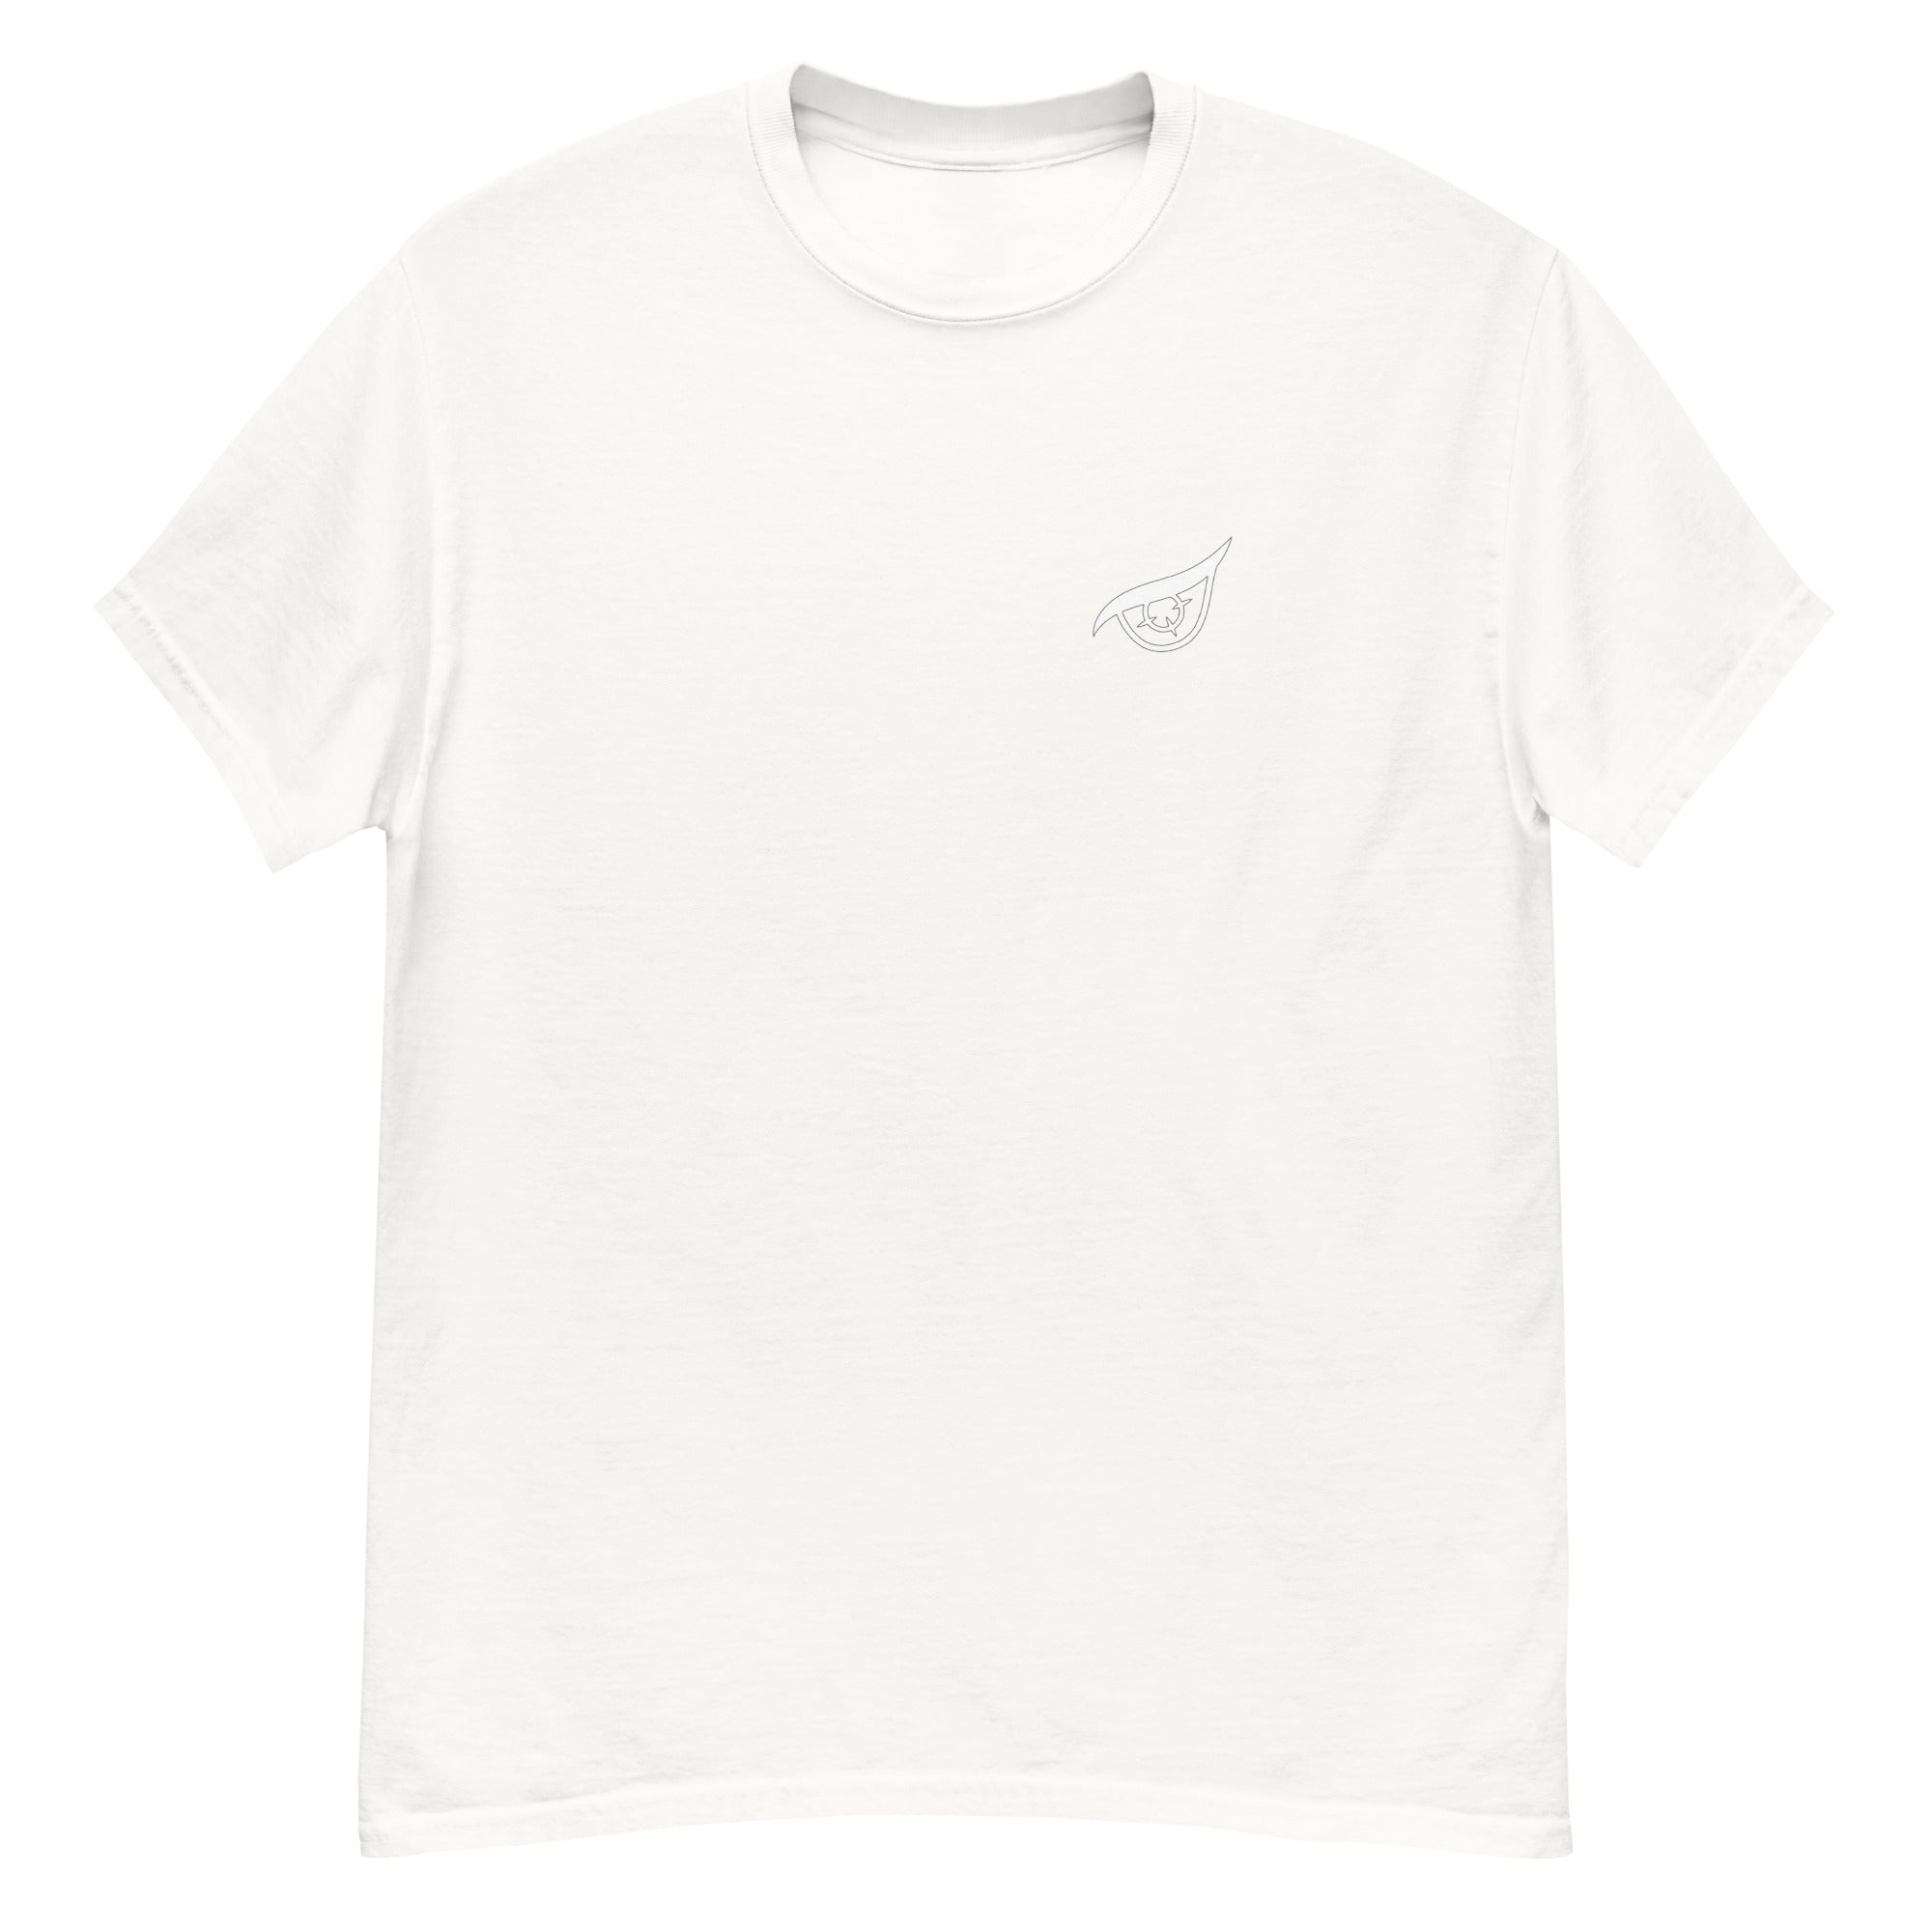 TeamBS Shirt